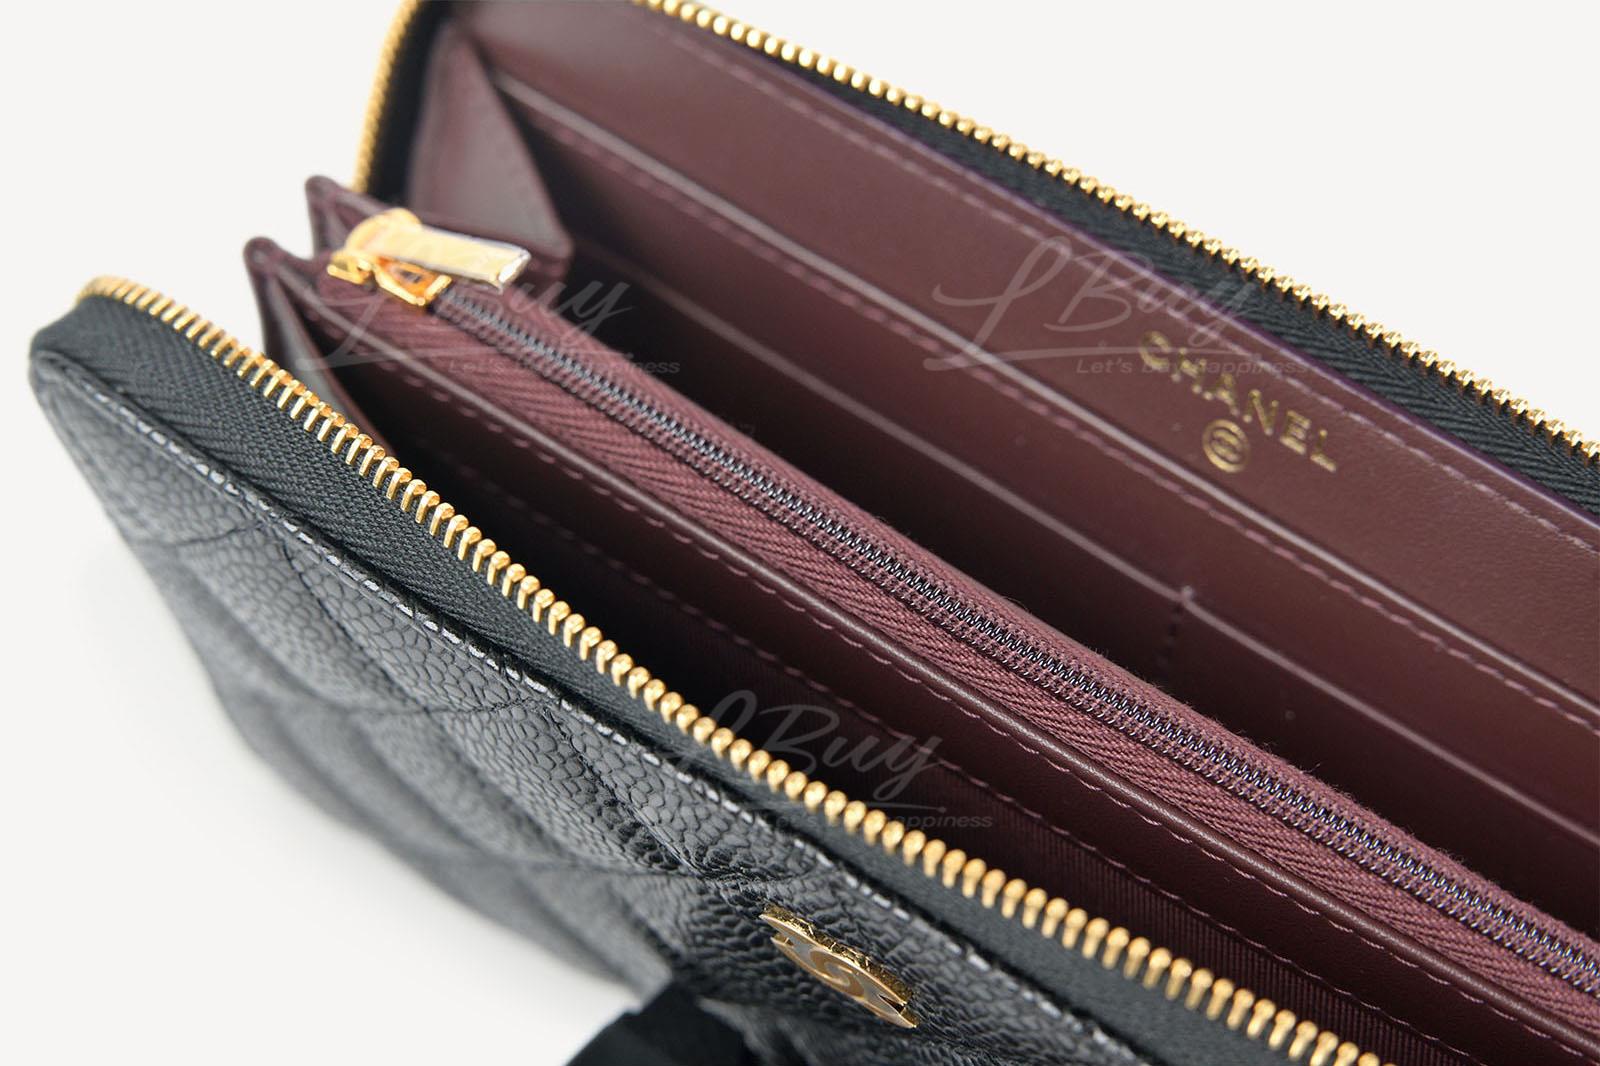 Chanel Classic Long Zipped Wallet Ap0242 Y01588 C3906, Black, One Size